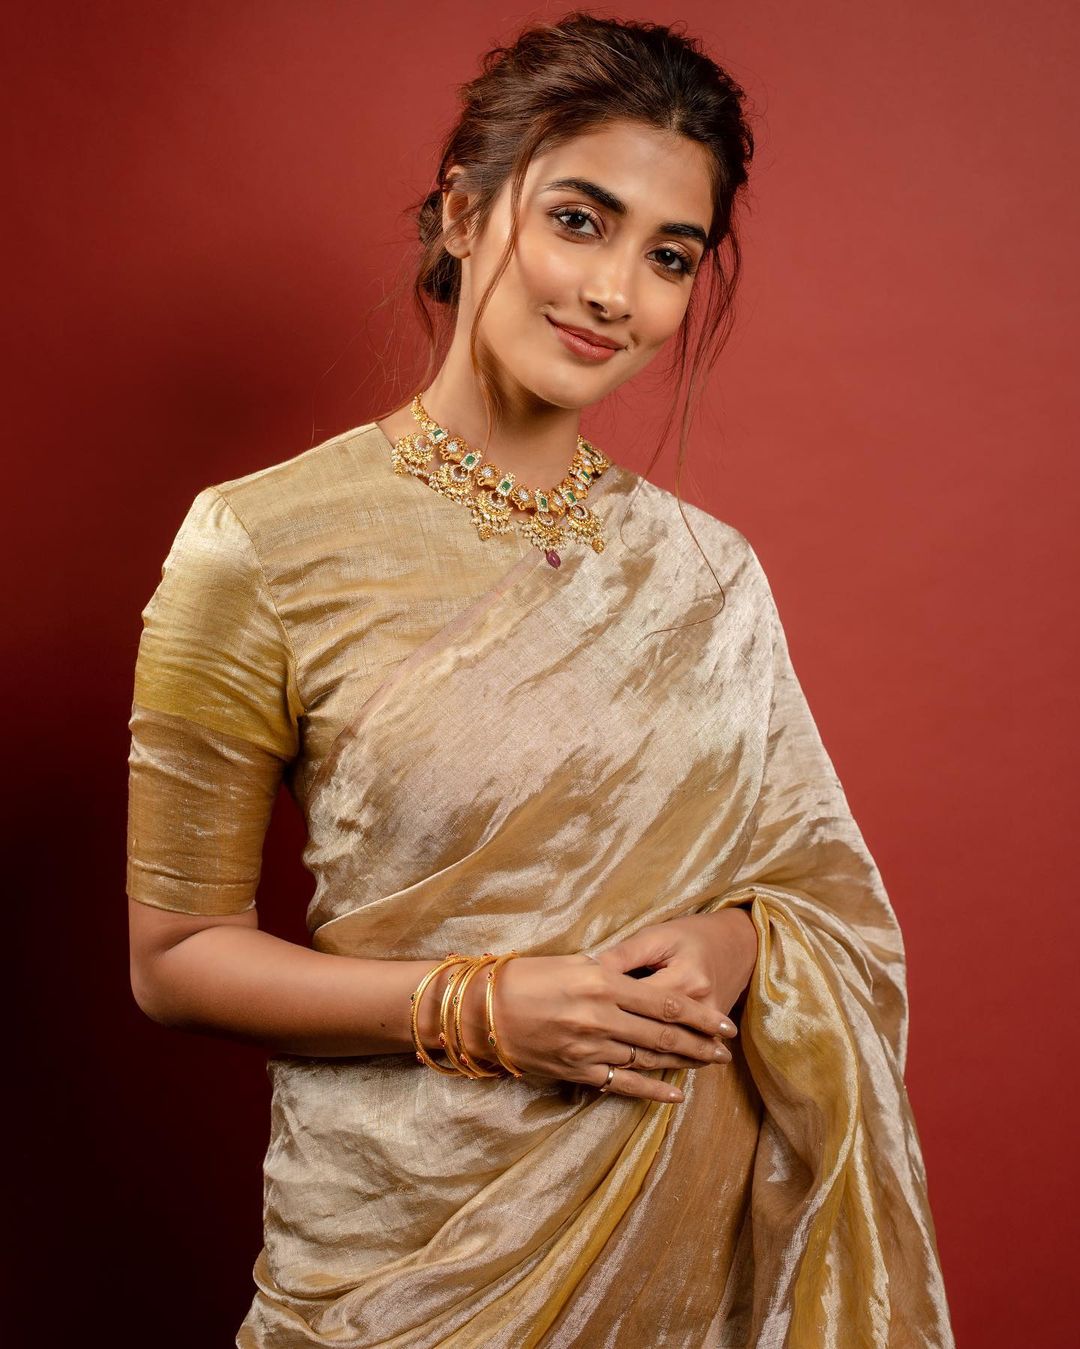 Pooja Hegde accessorises the look with an ornate neckpiece.